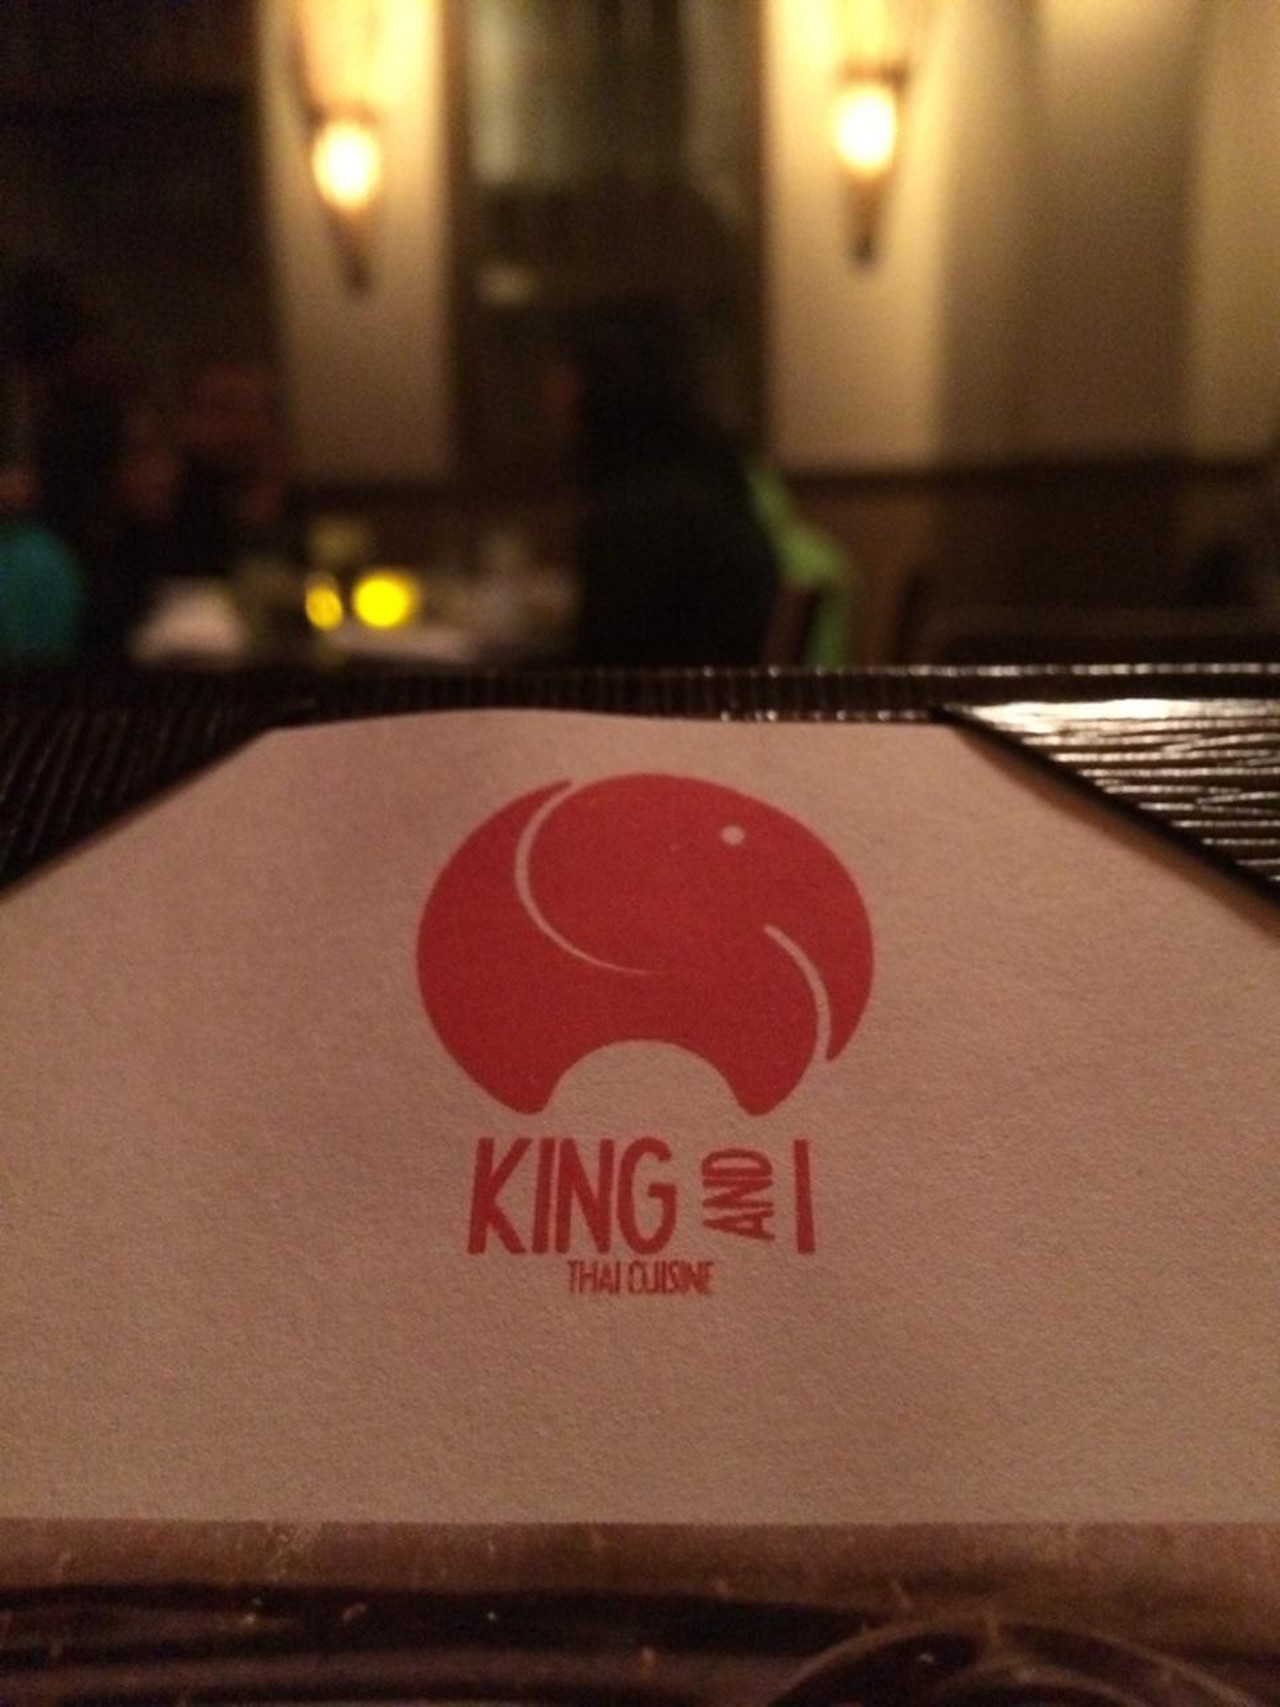 The King I St Louis South Grand Thai Restaurants